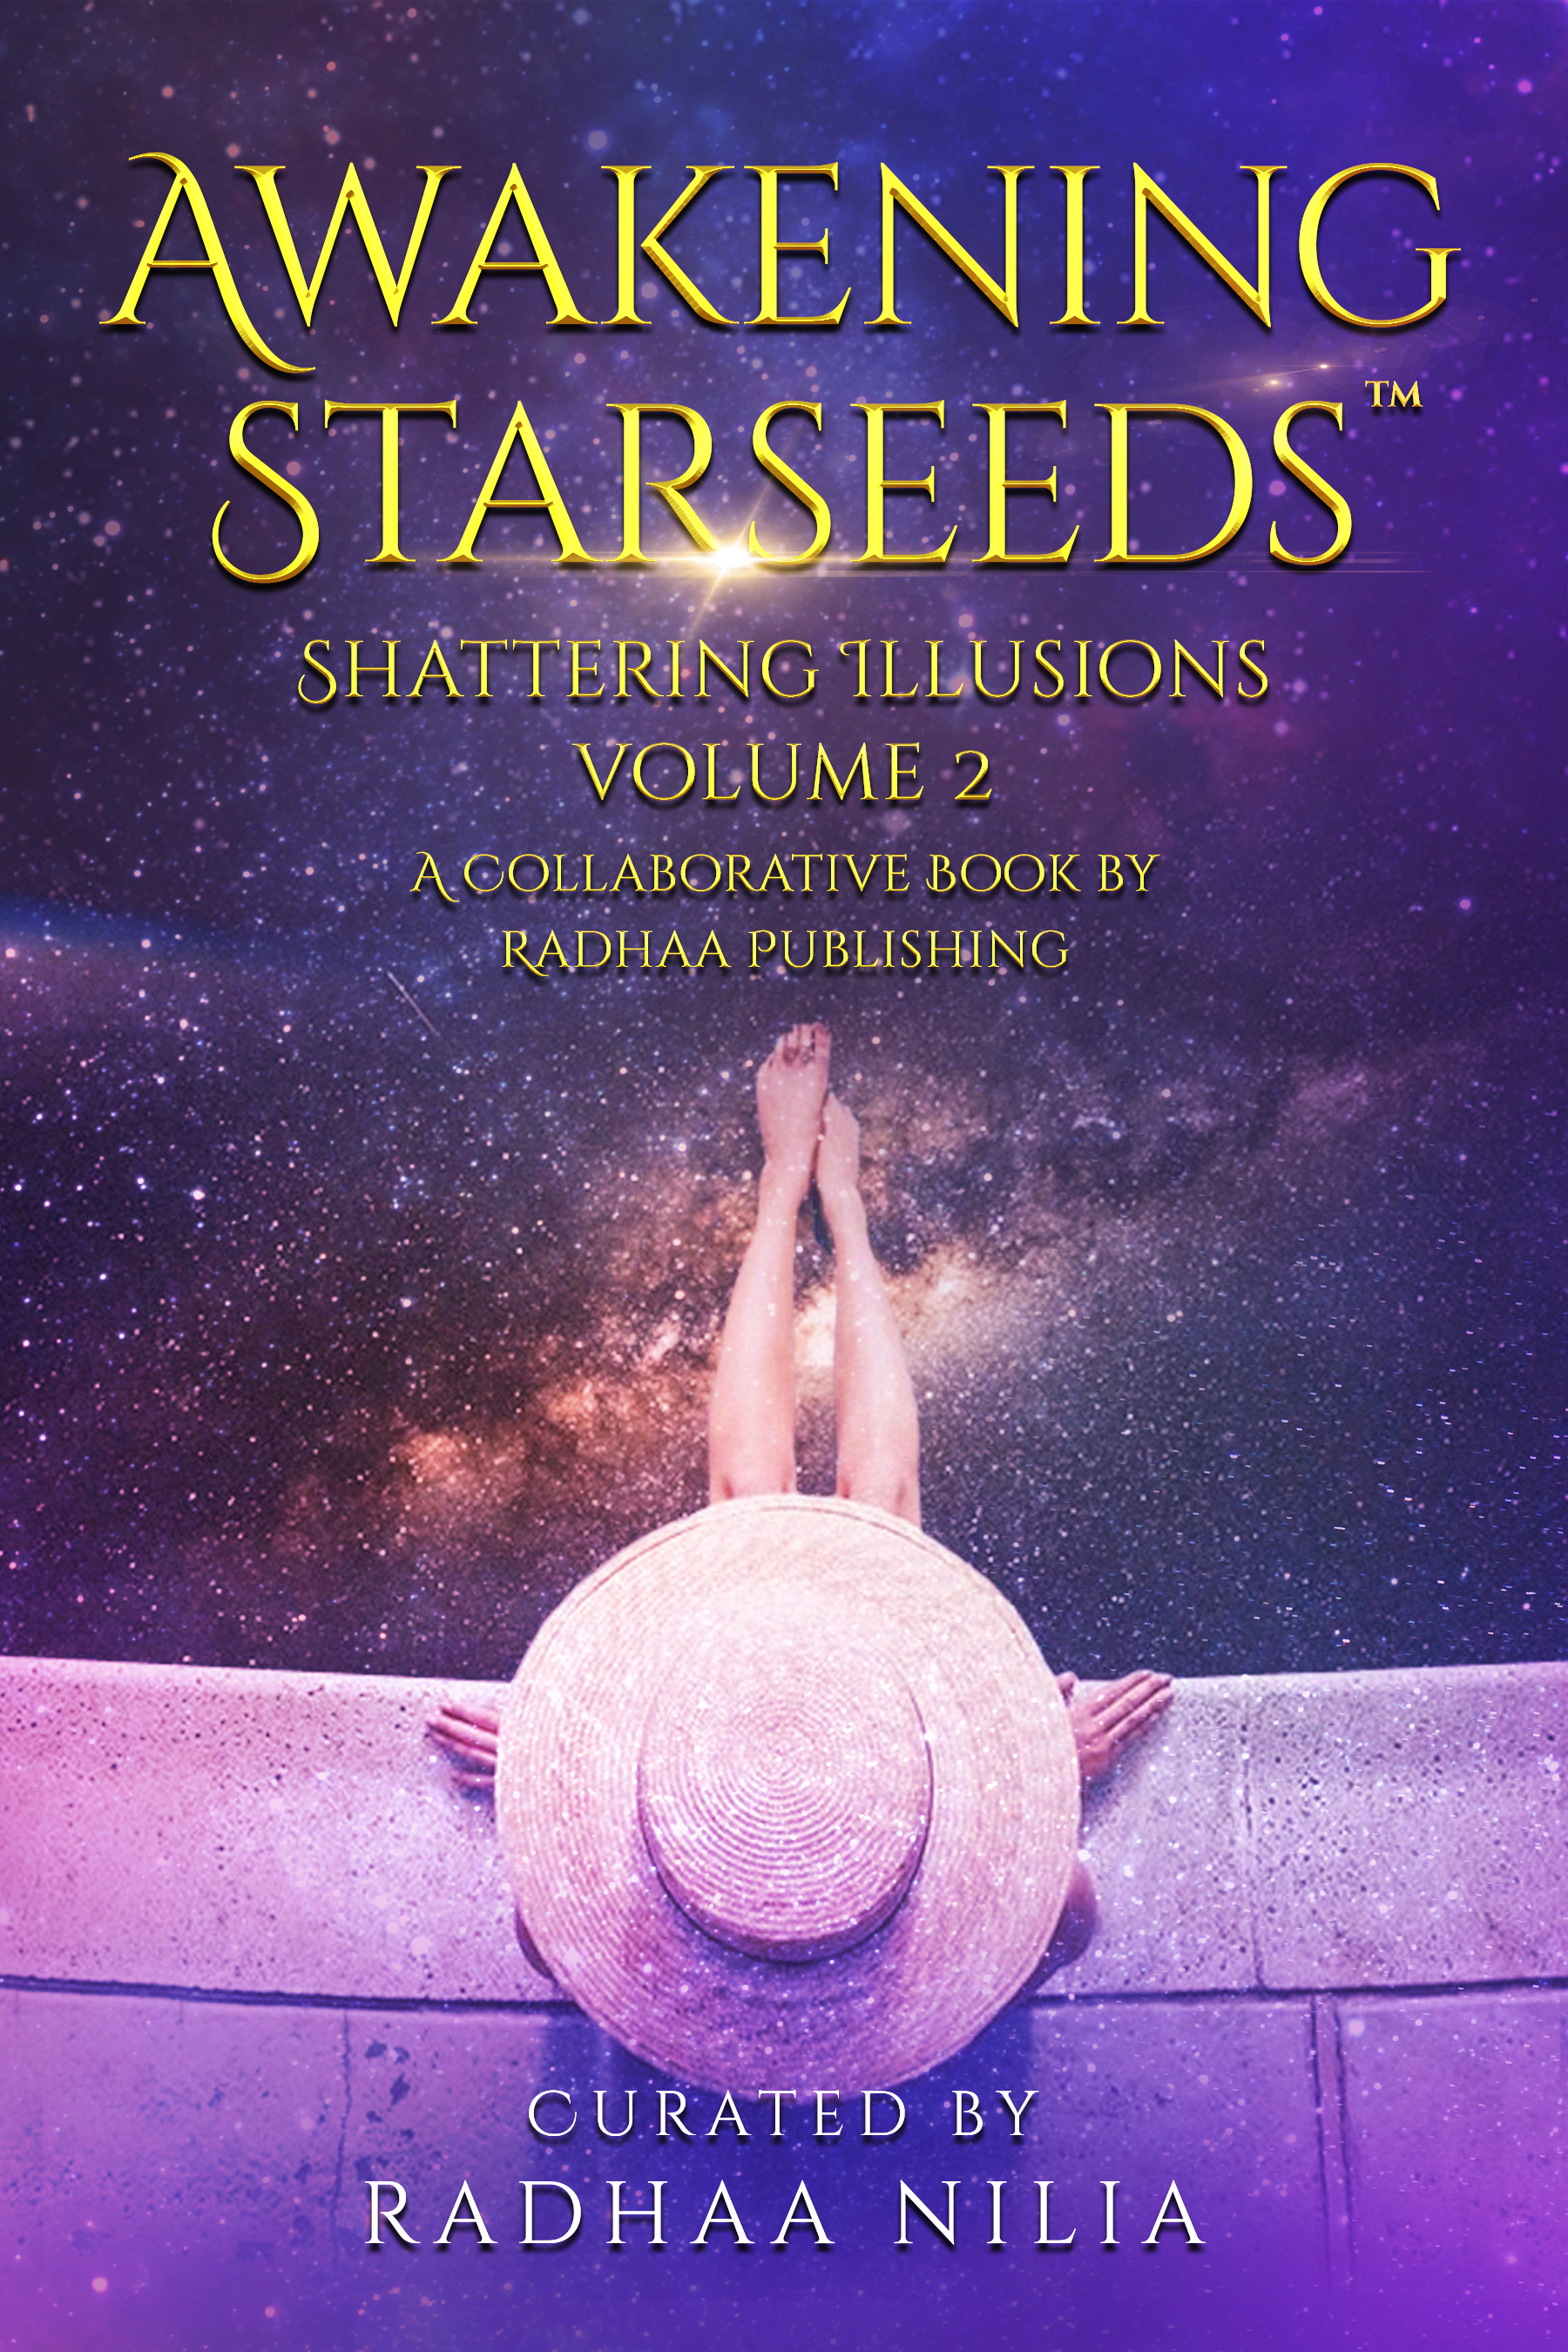 Awakening Starseeds Volume 2